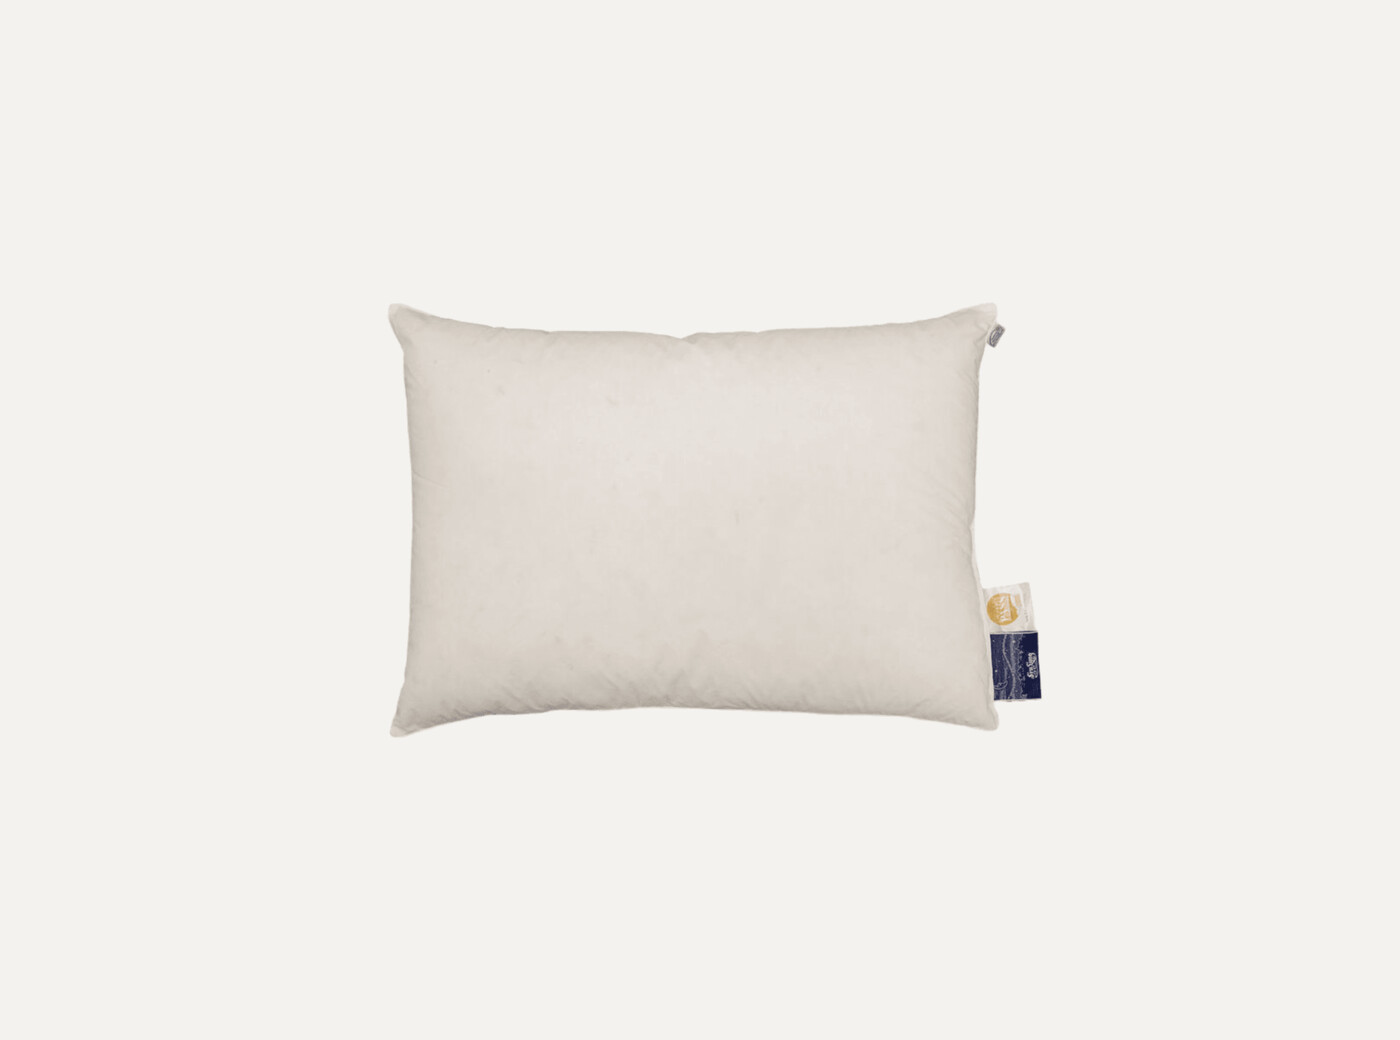 Medium Pillow 9